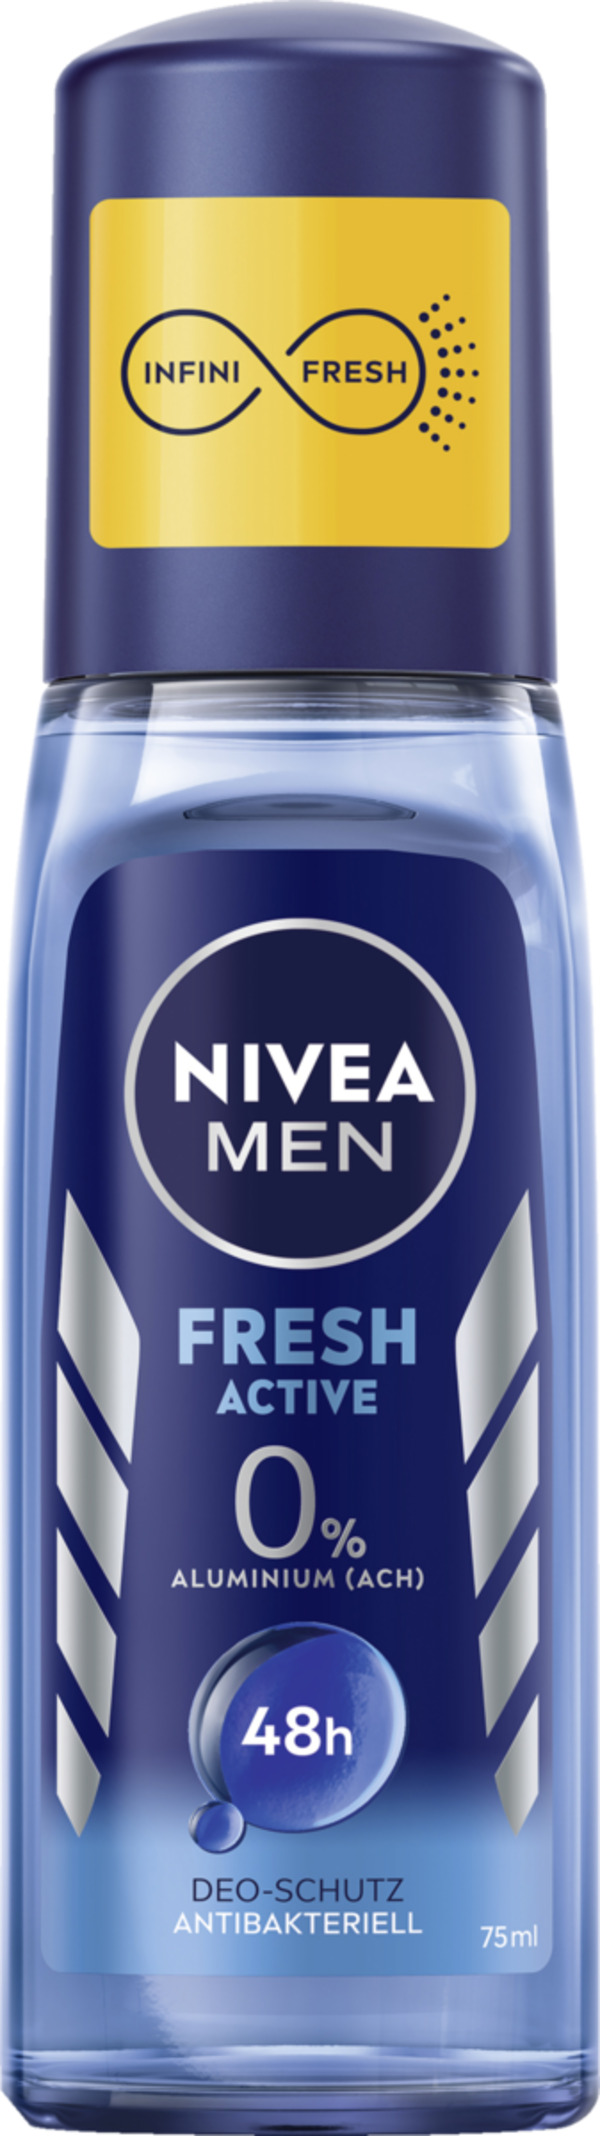 Bild 1 von NIVEA MEN Deodorant Zerstäuber Fresh Active